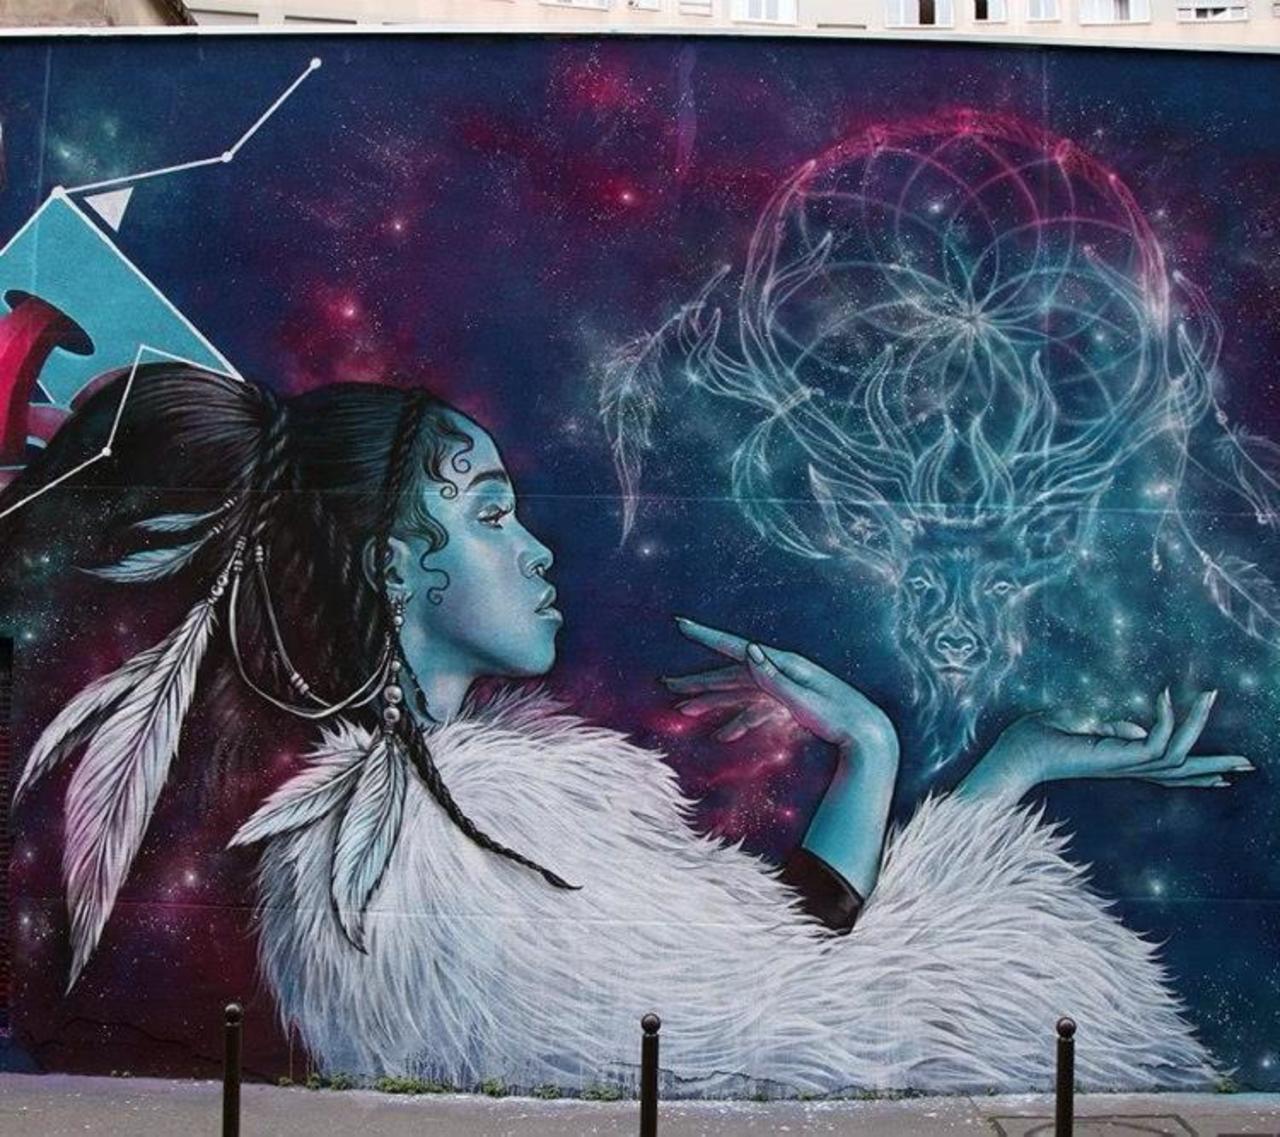 Artist Alex new Street Art mural located in Paris, France #art #mural #graffiti #streetart http://t.co/qPdFkj8WkZ